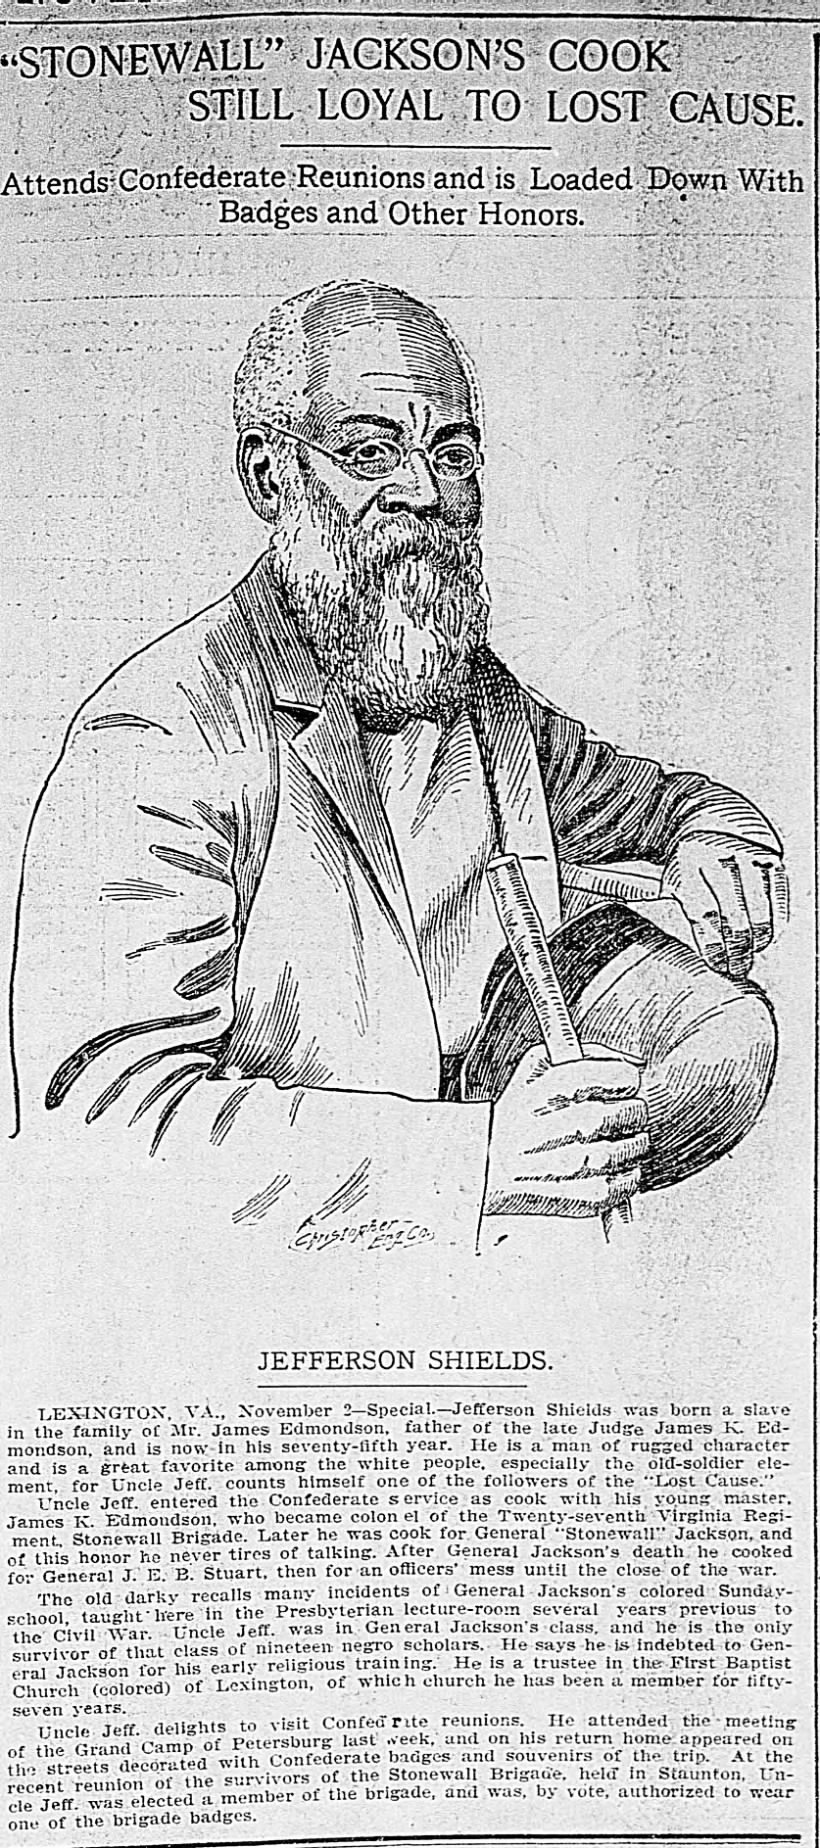 Jefferson Shields profile in Richmond paper, Nov. 3, 1901